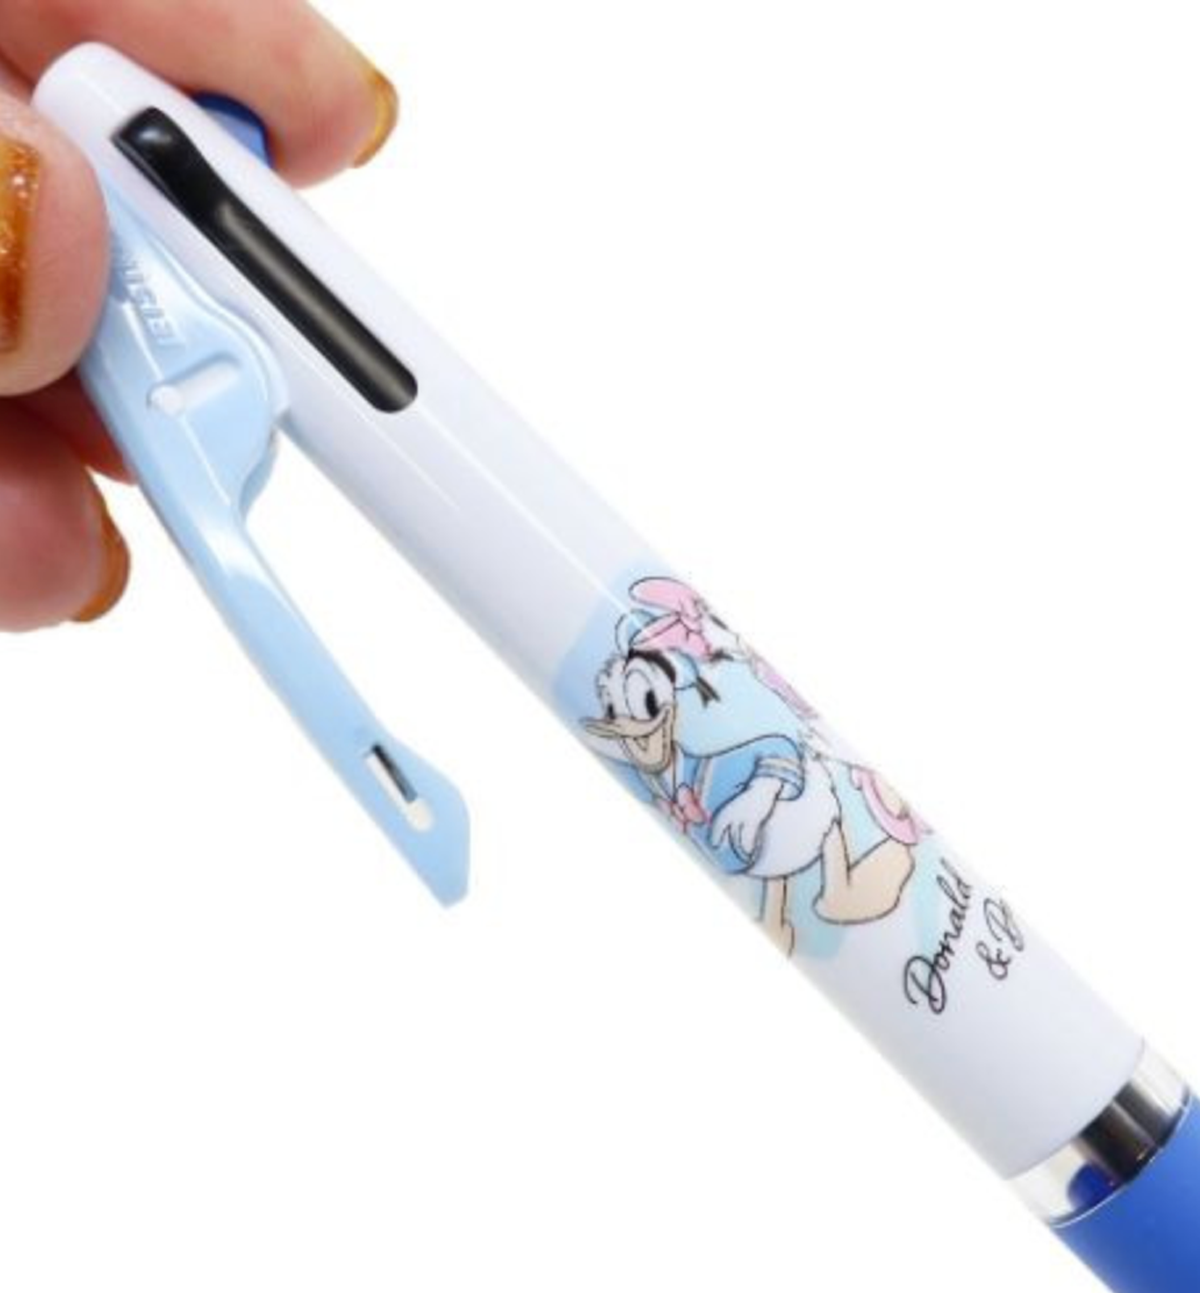 Disney Jetstream 0.5mm Pen [Donald Duck]